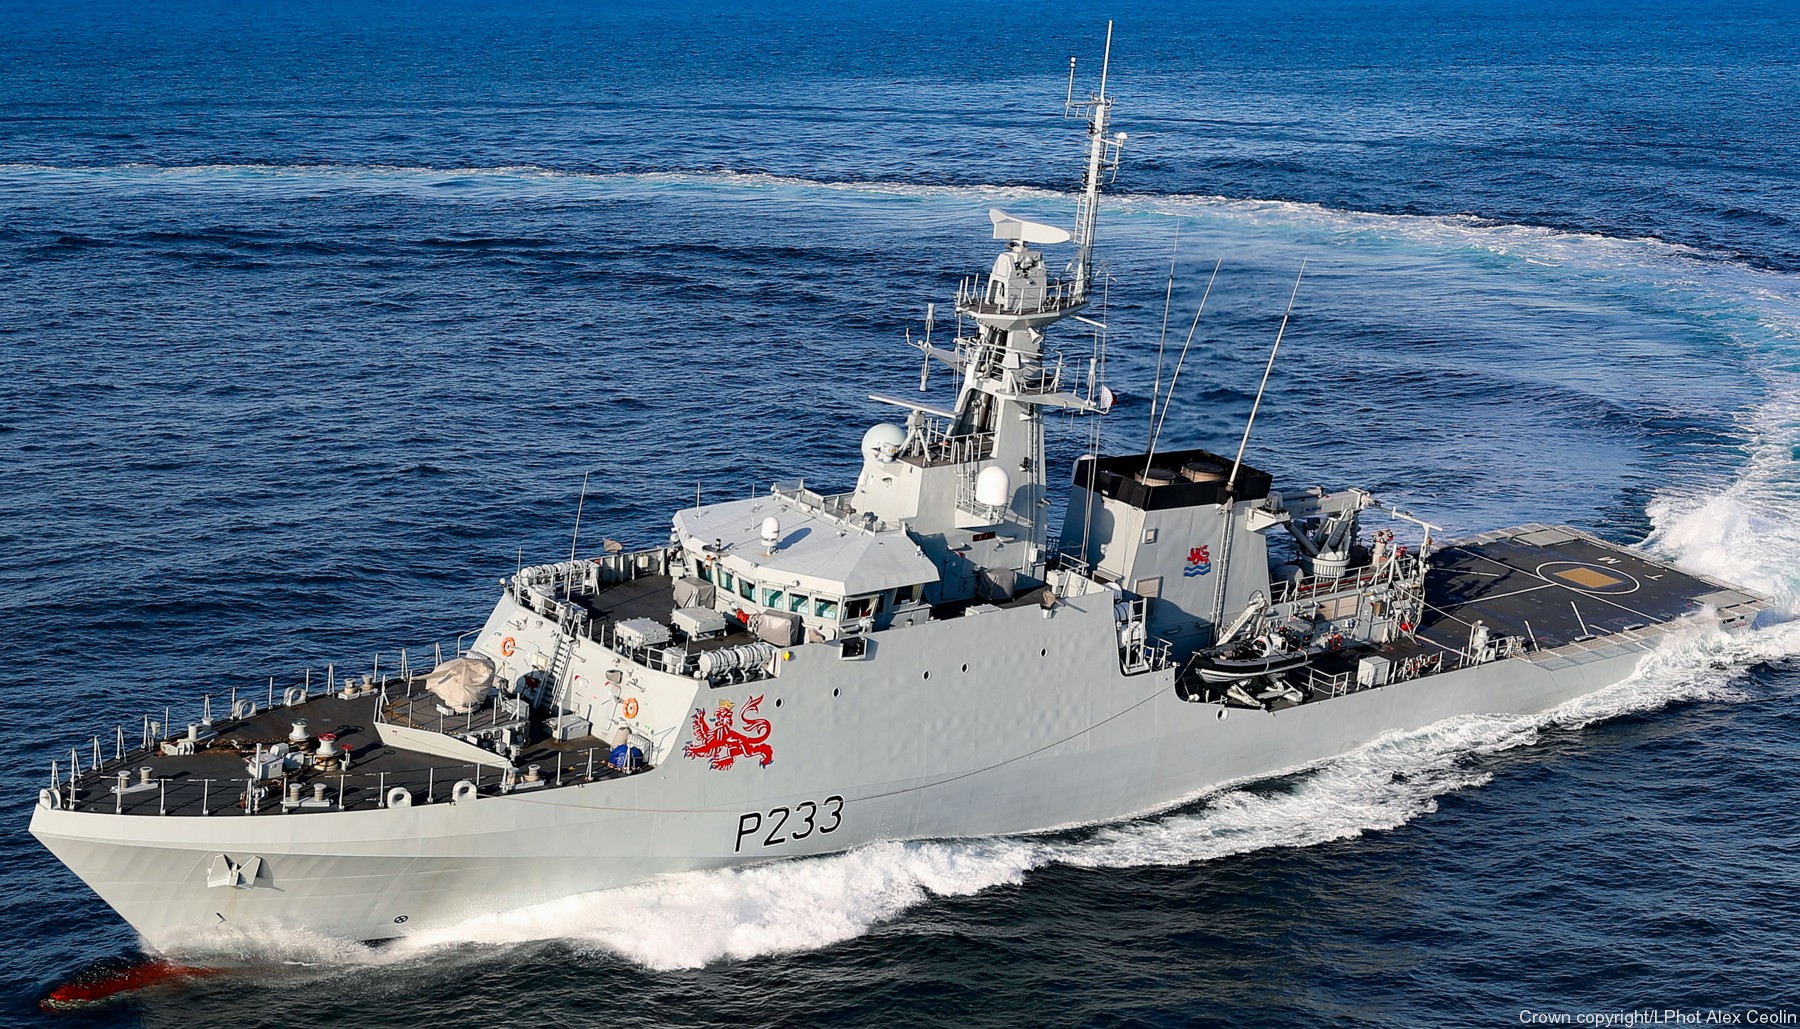 p-233 hms tamar river class offshore patrol vessel opv royal navy 24